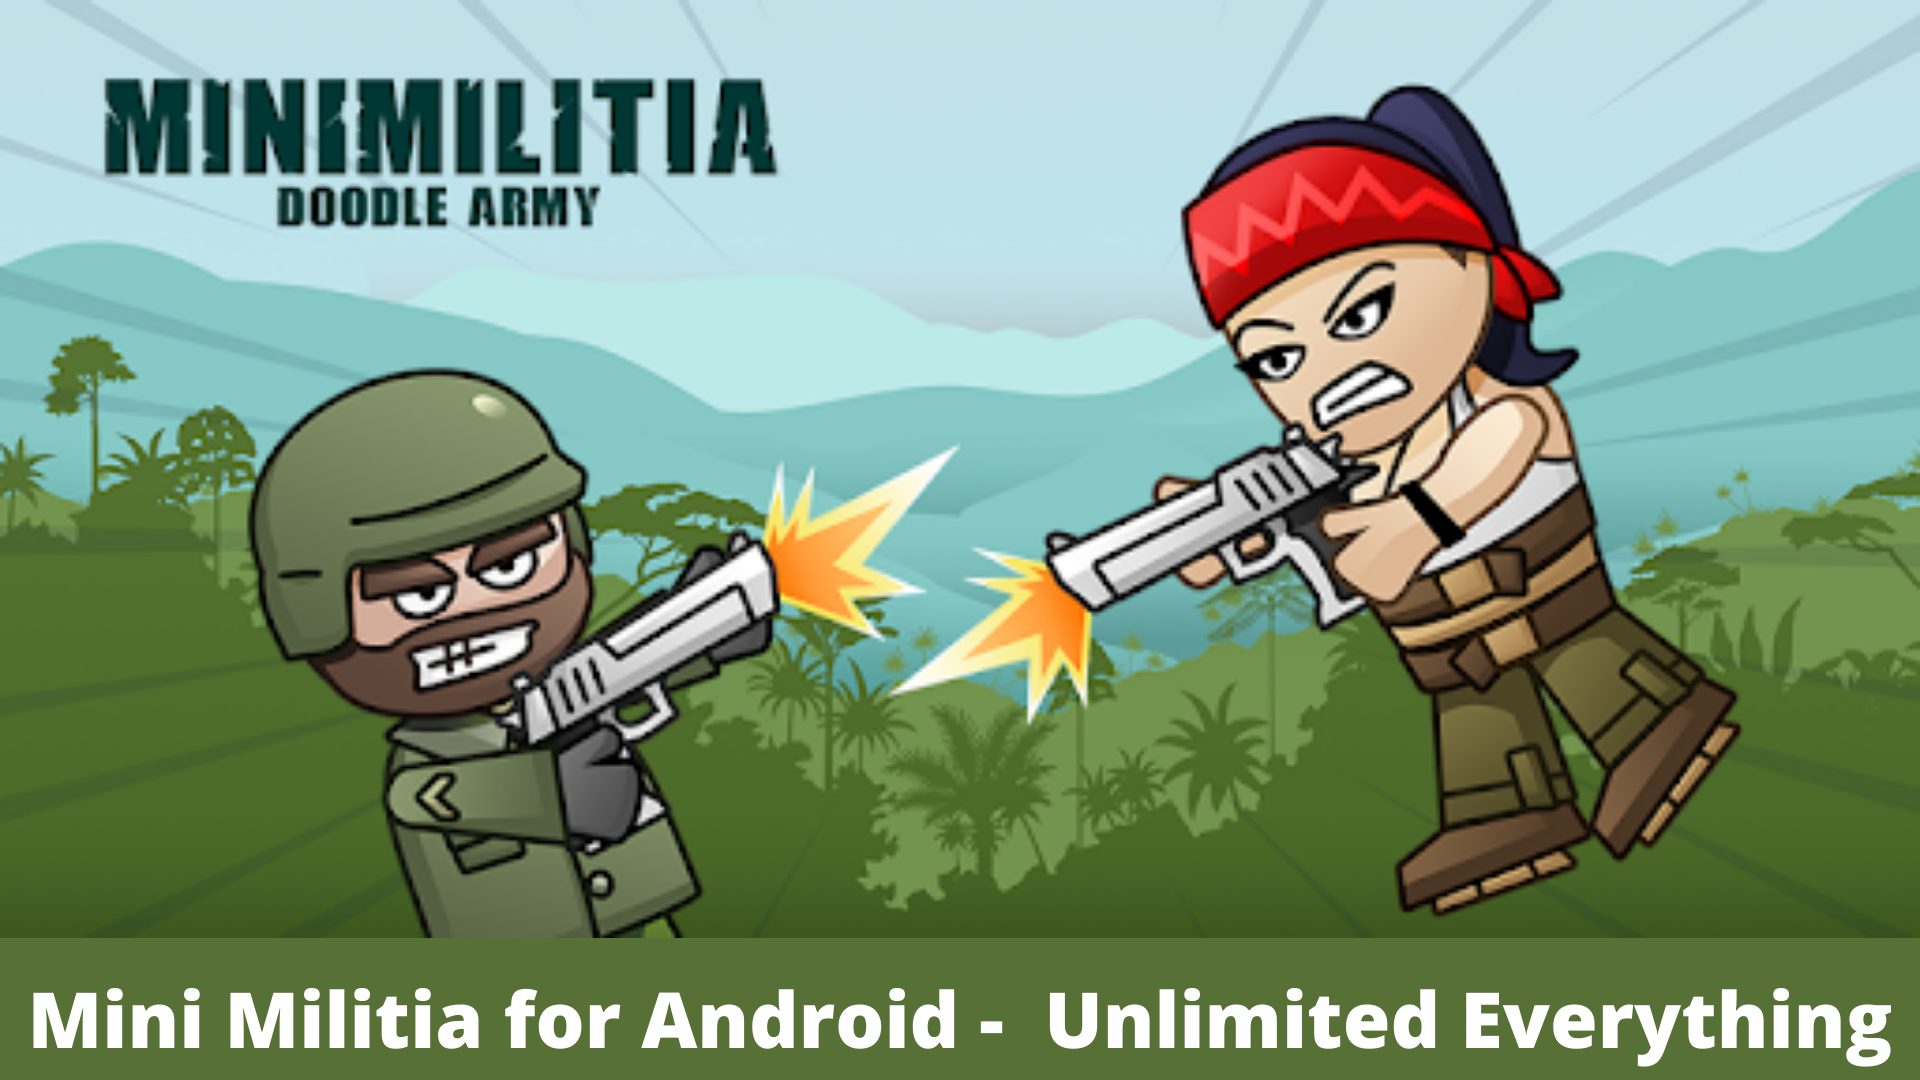 Mini Militia for Android